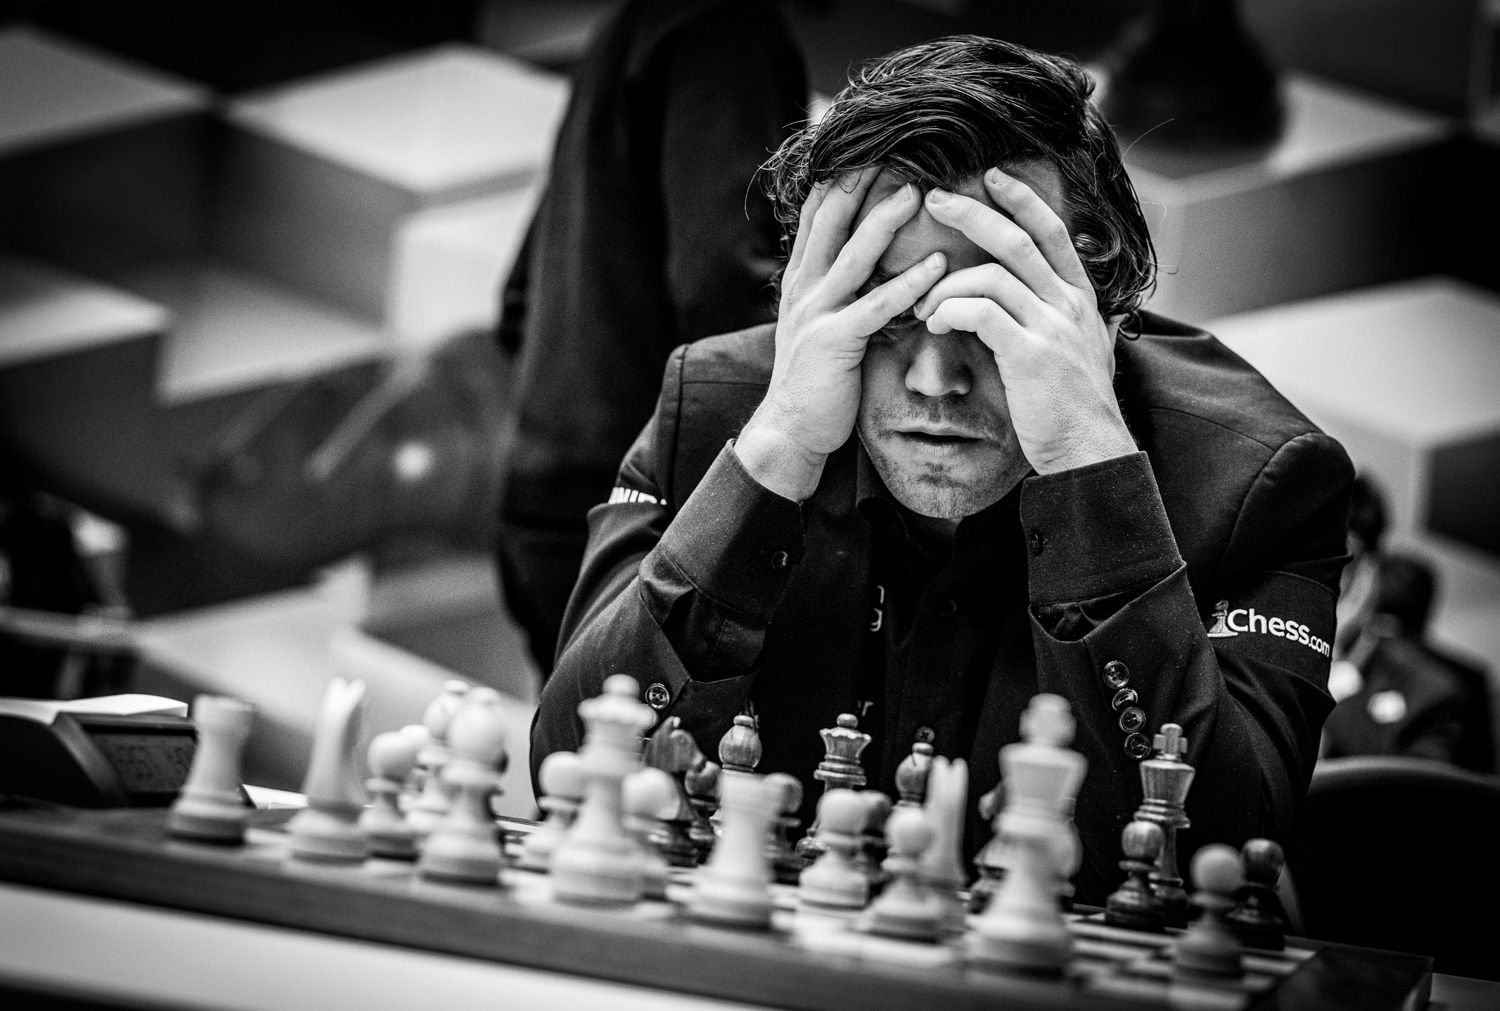 Tata Steel Chess 8: Carlsen beats Caruana